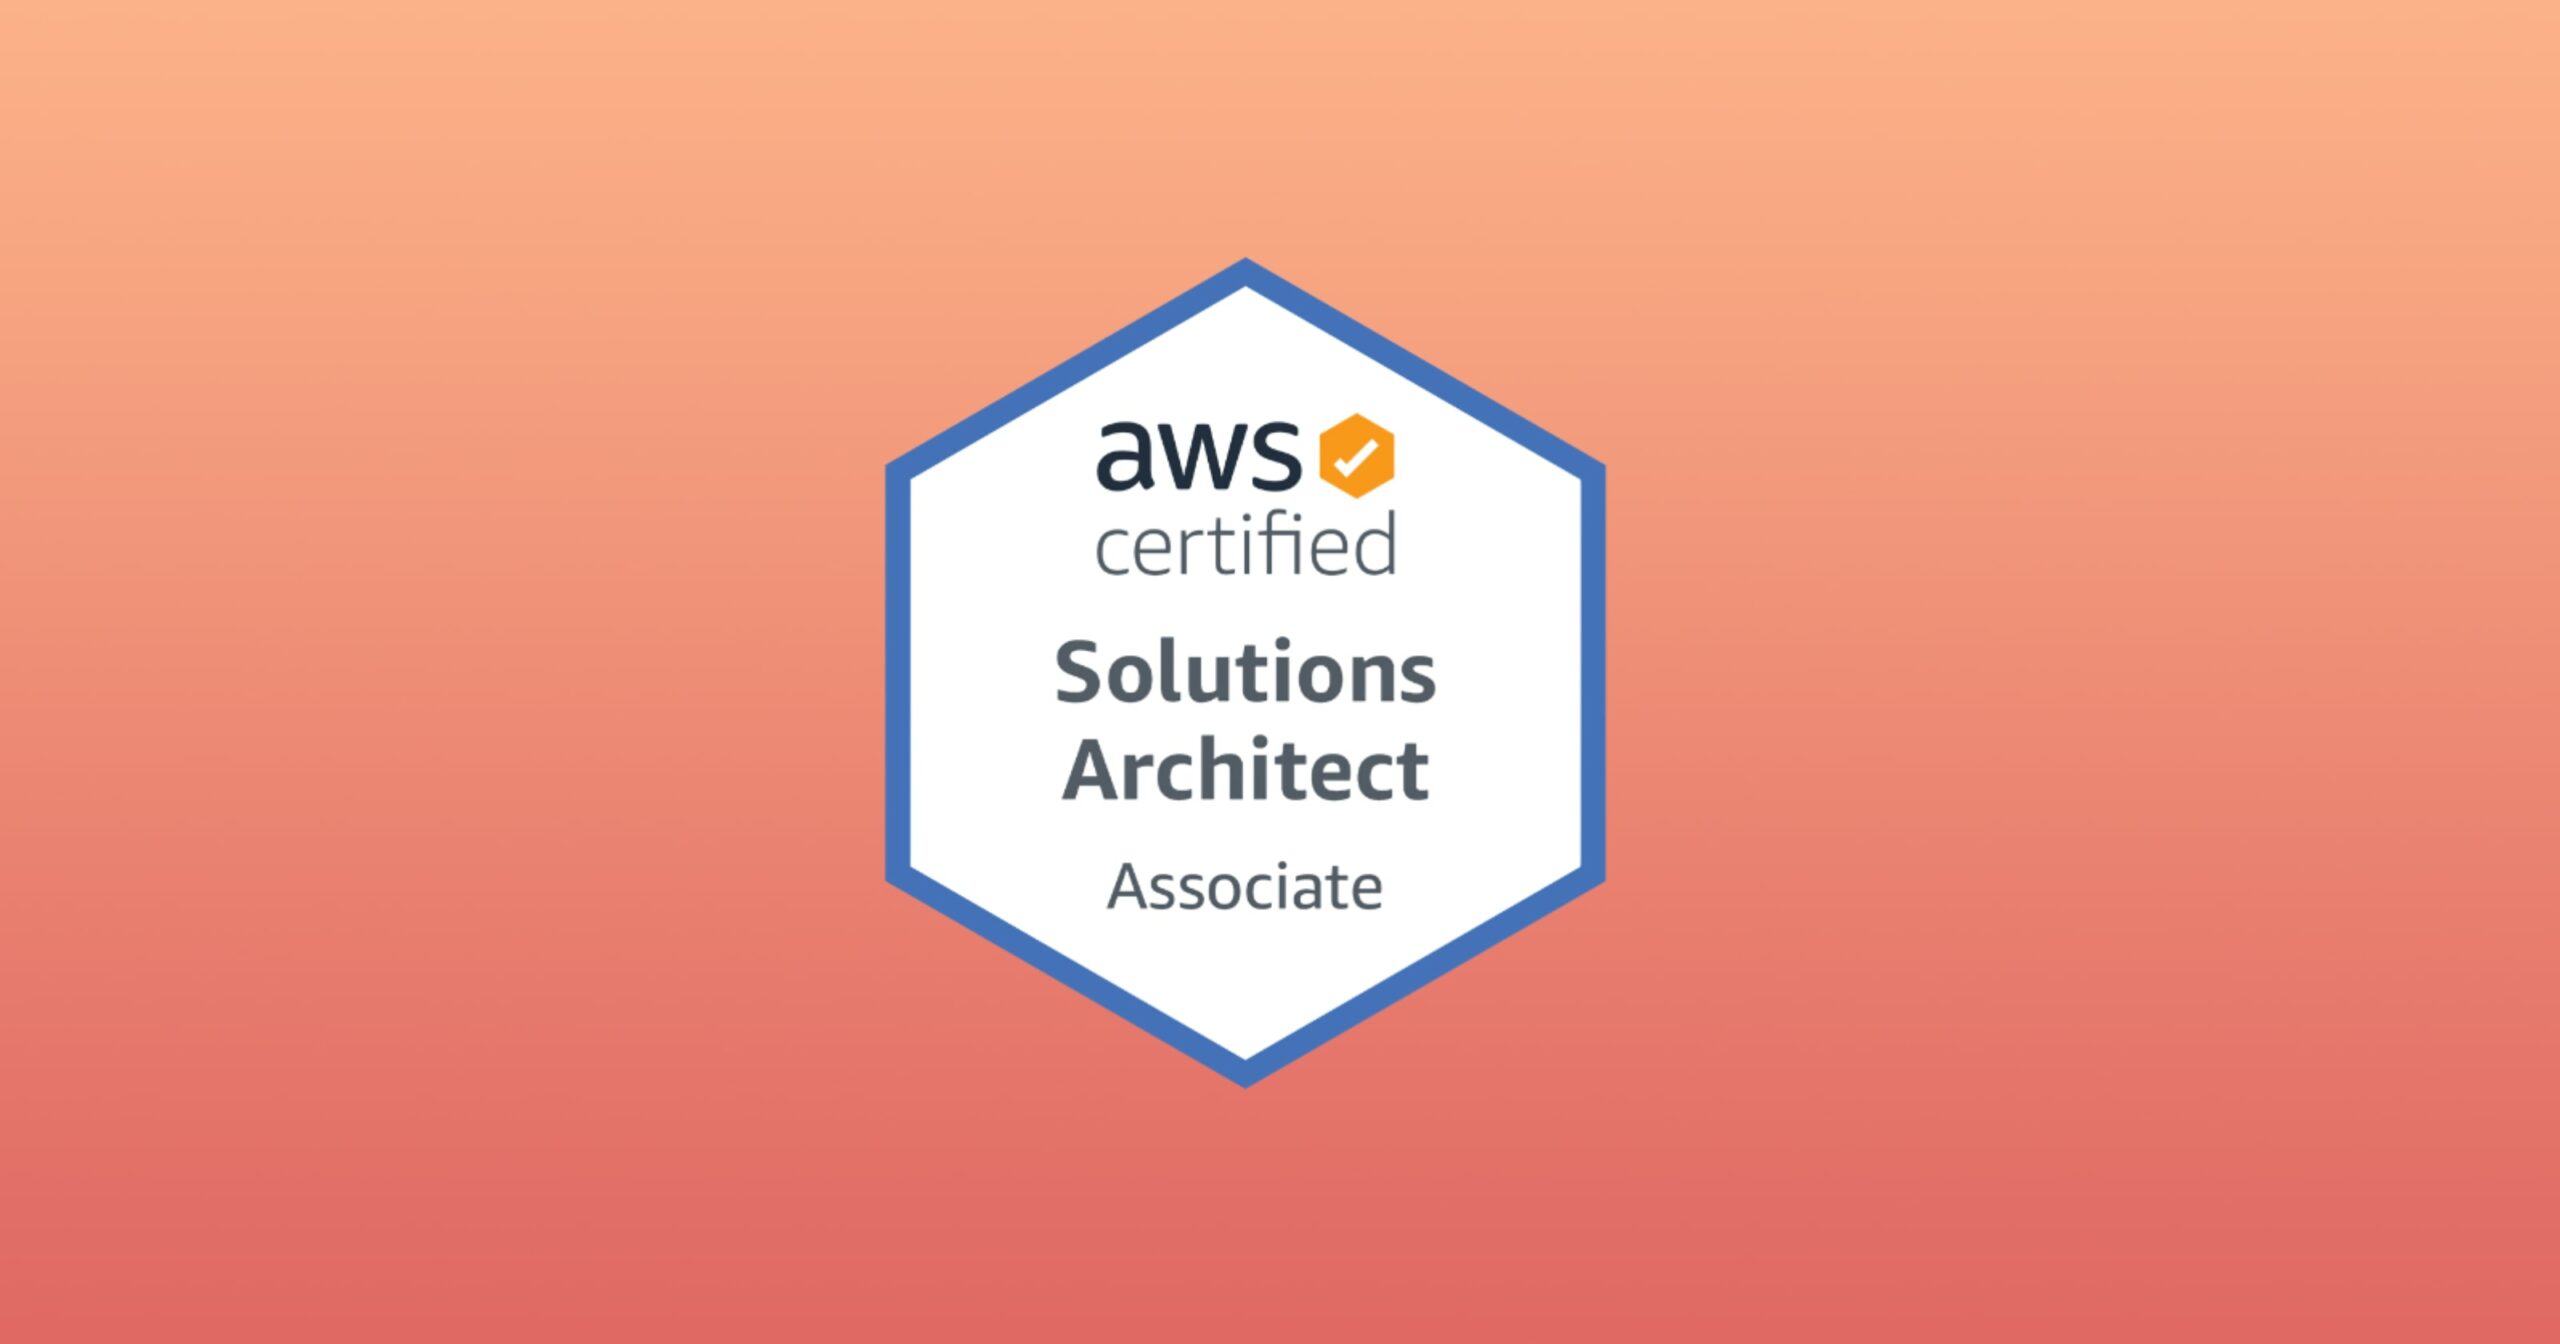 Amazon Web Services – ARCH – Architecting on AWS